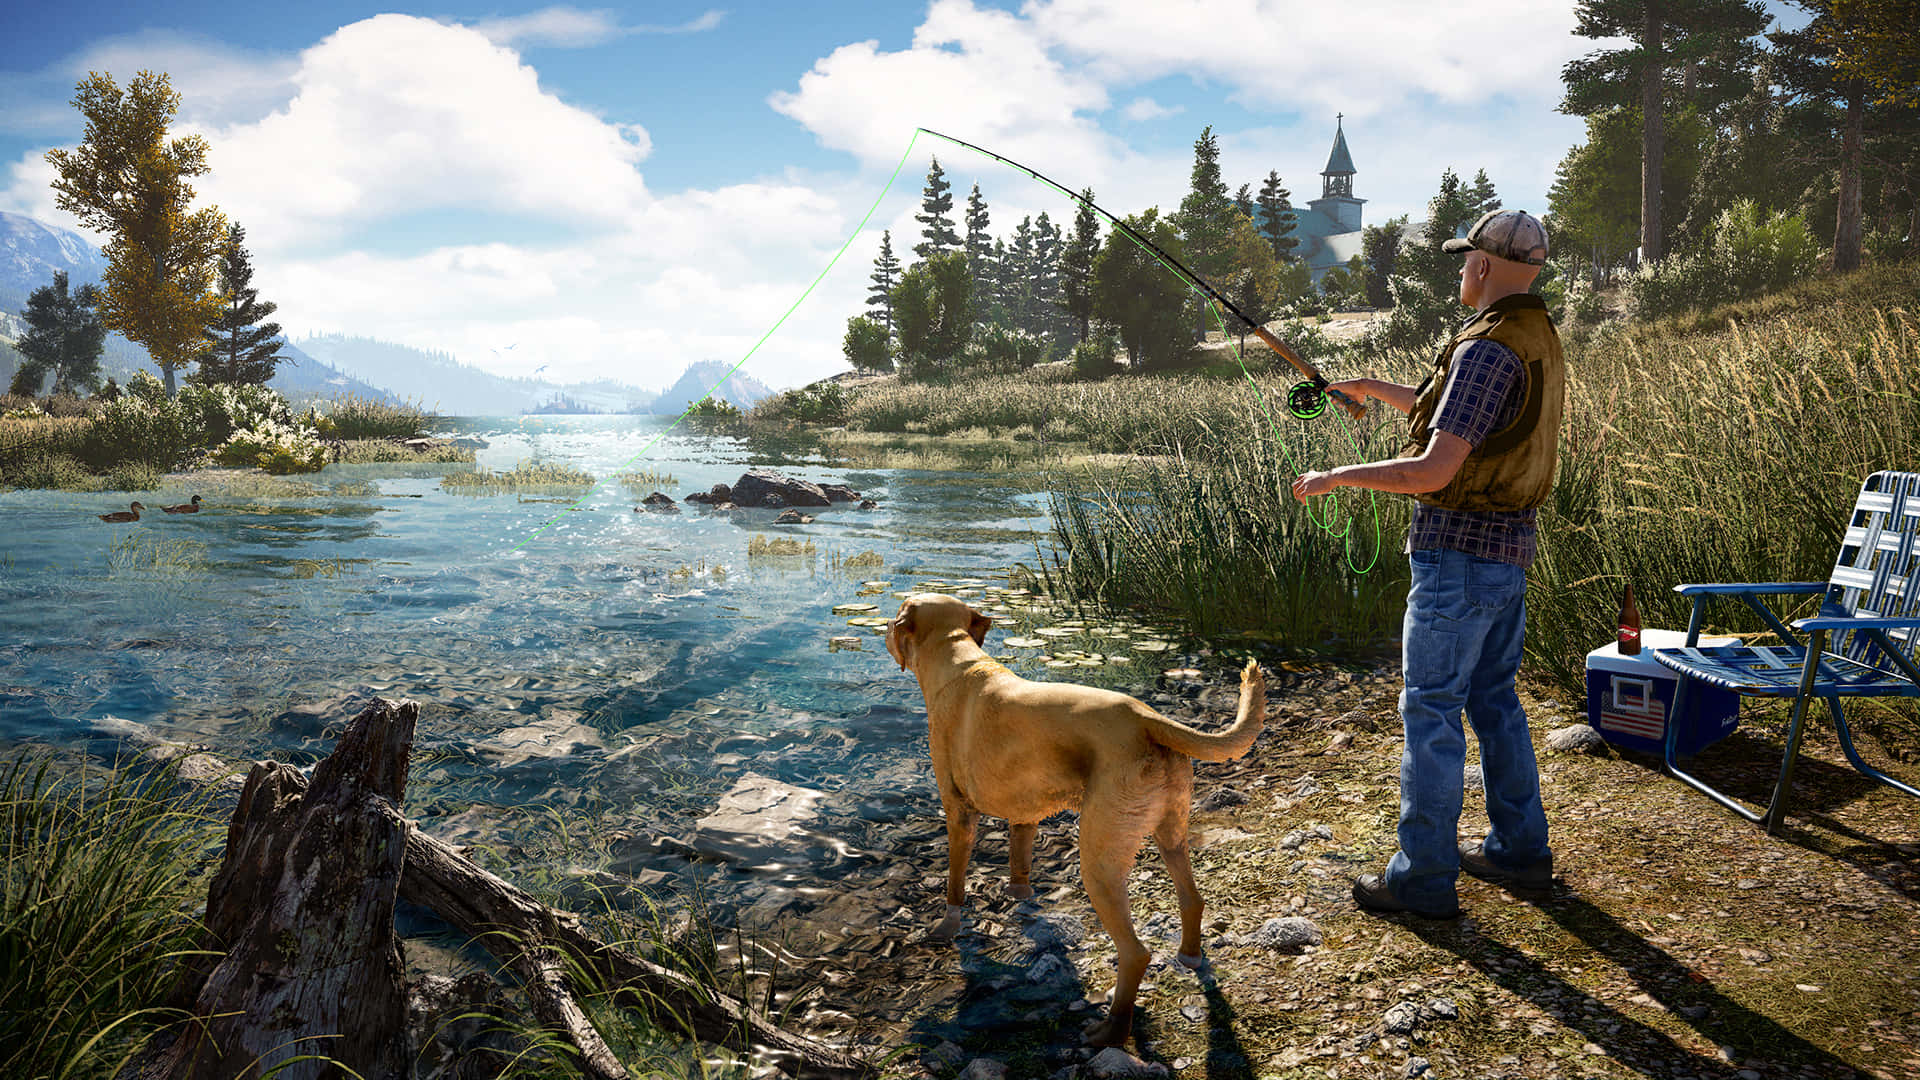 Tag med på Far Cry 5's farlige verden i fantastisk 4K-opløsning. Wallpaper